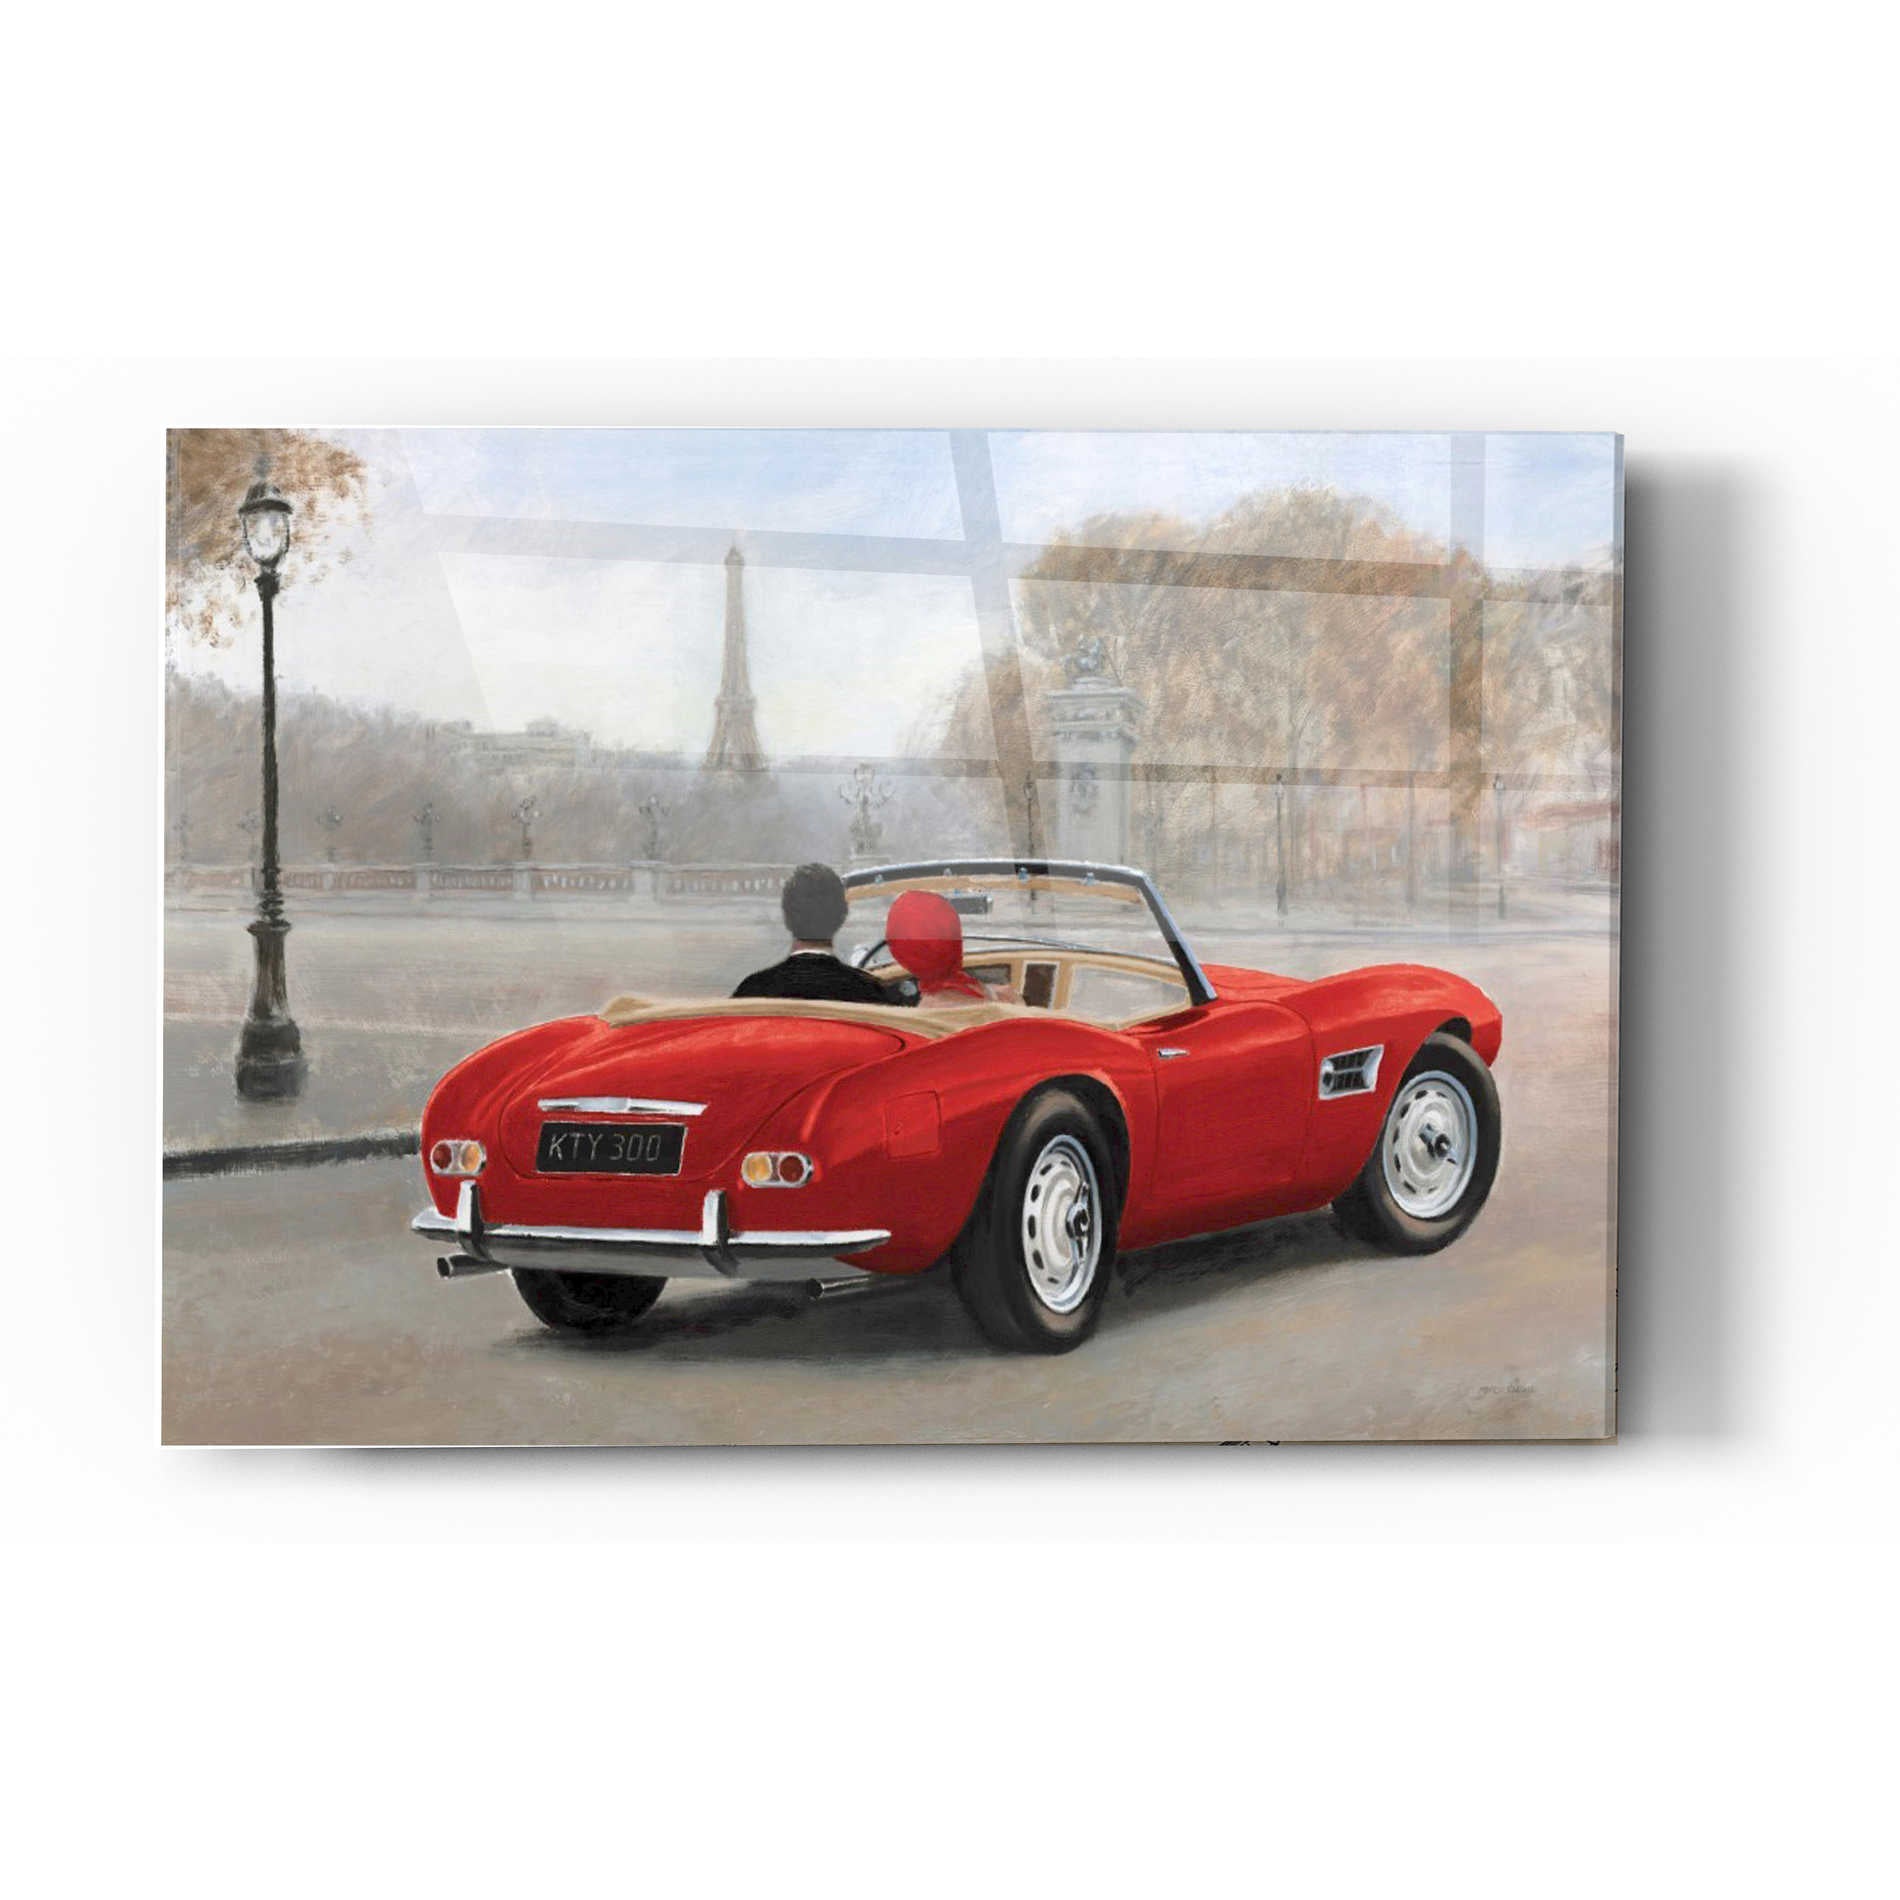 Epic Art 'A Ride in Paris III Red Car' by Marco Fabiano, Acrylic Glass Wall Art,16x24